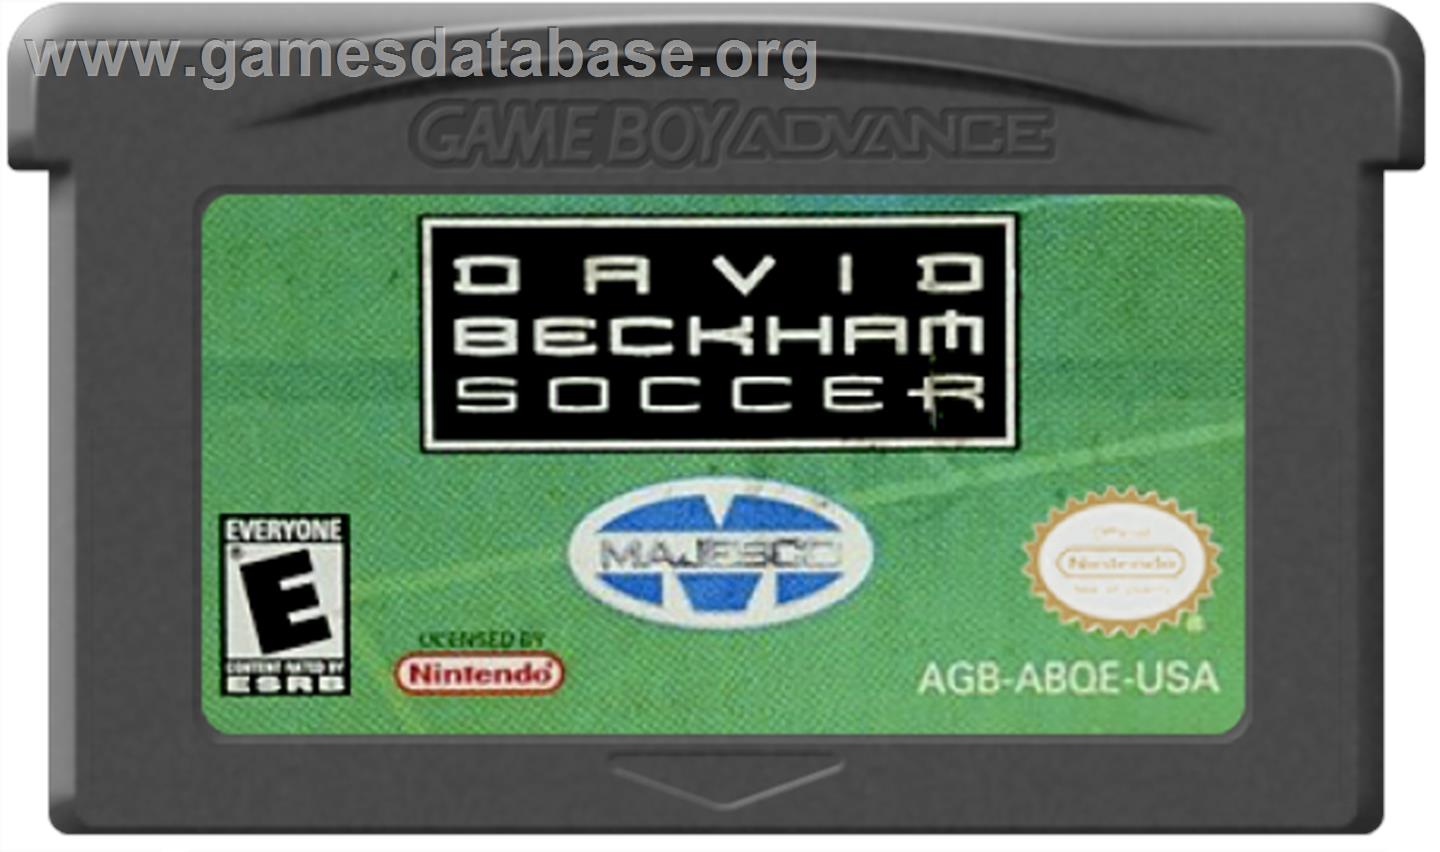 David Beckham Soccer - Nintendo Game Boy Advance - Artwork - Cartridge